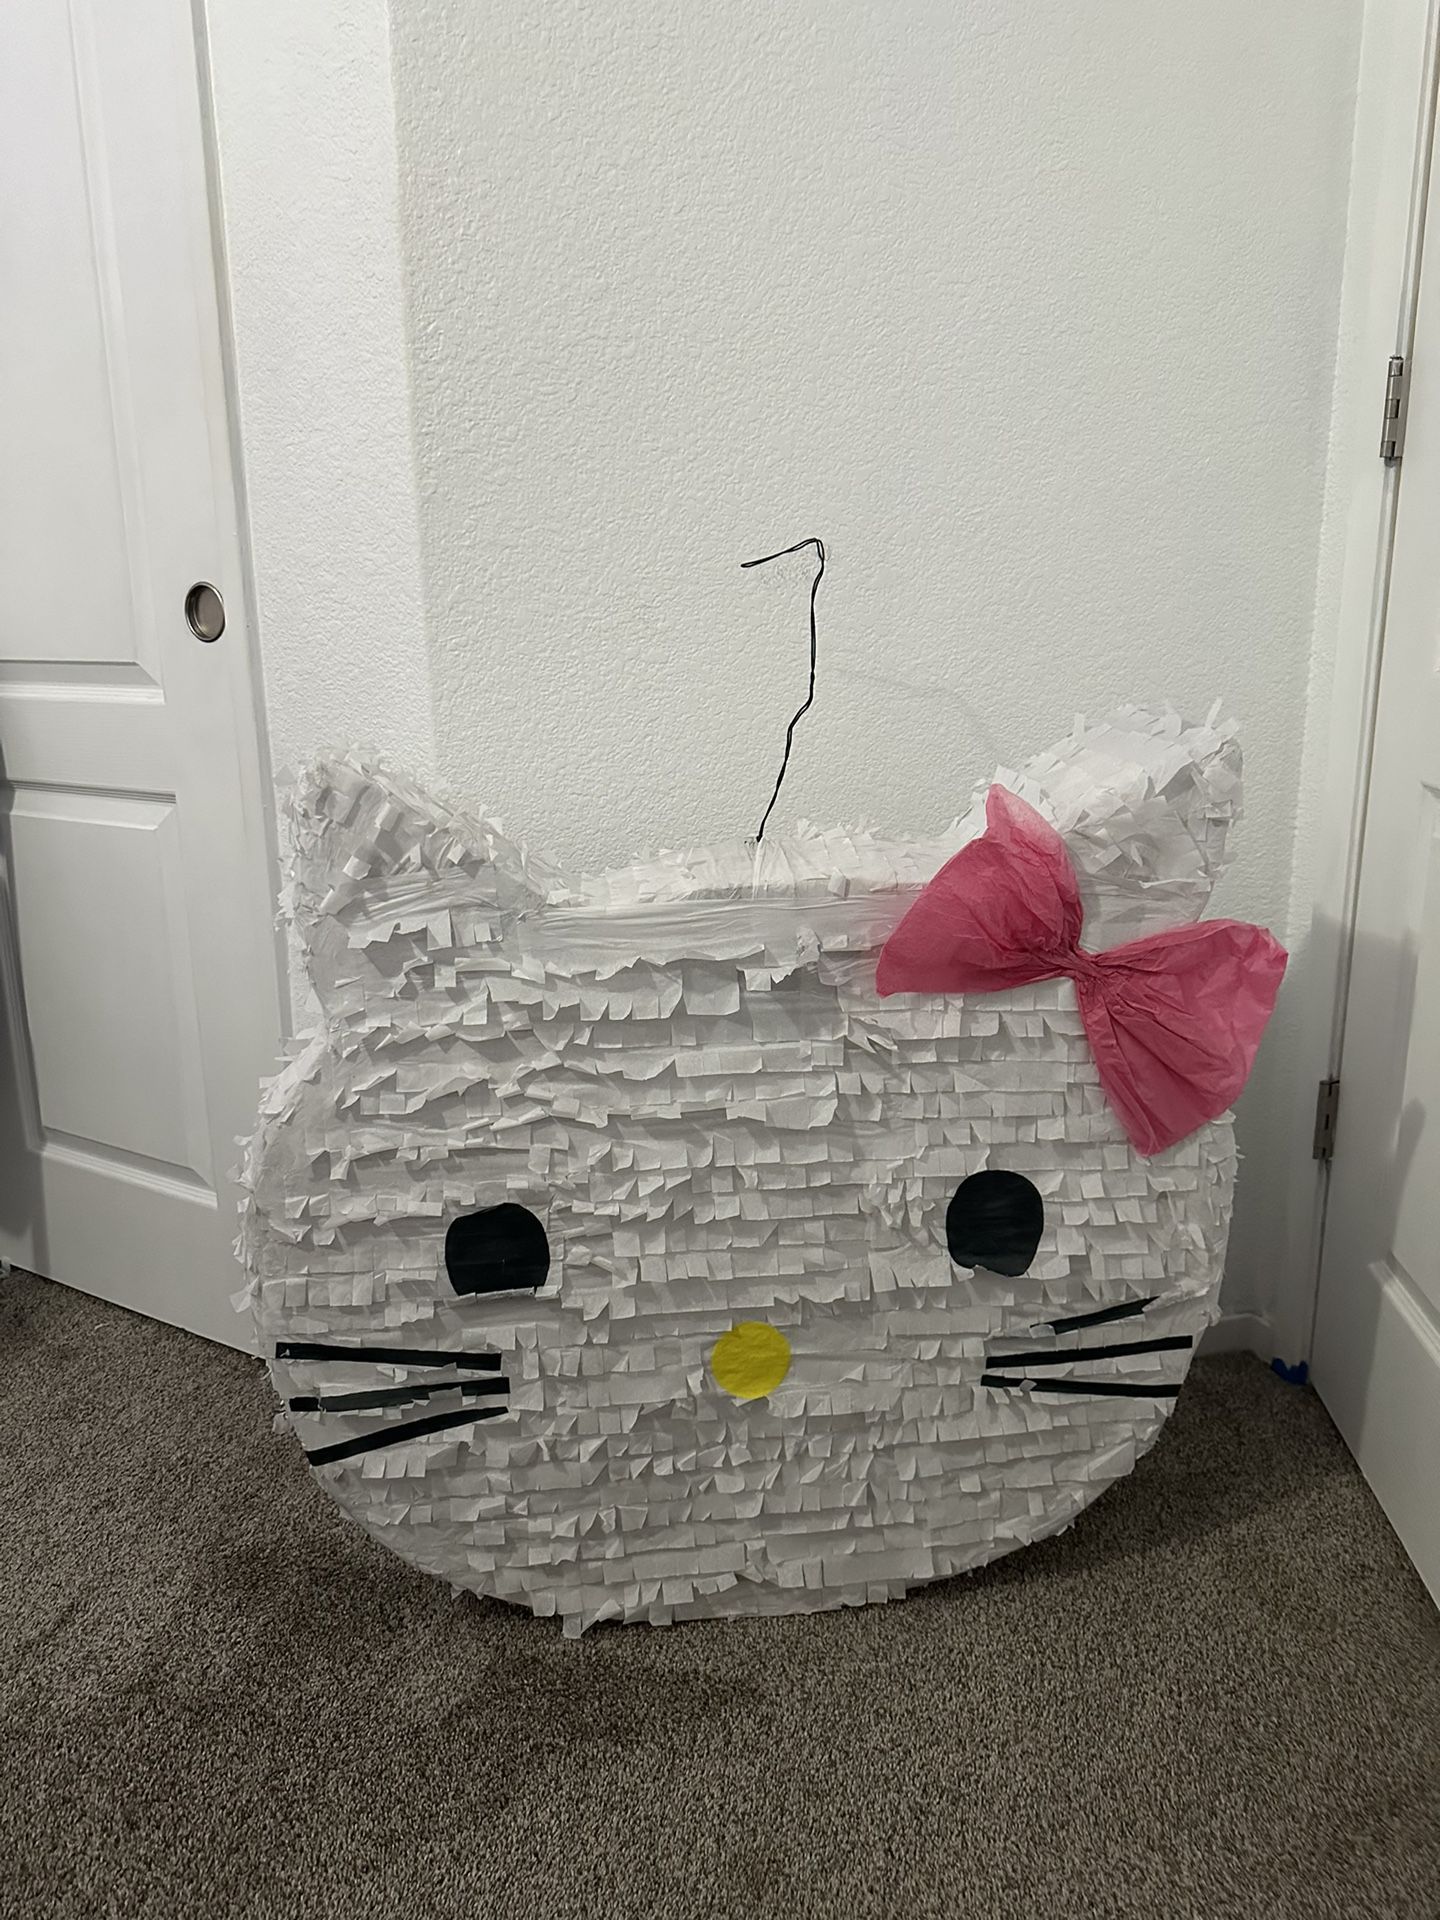 Hello Kitty Piñata 